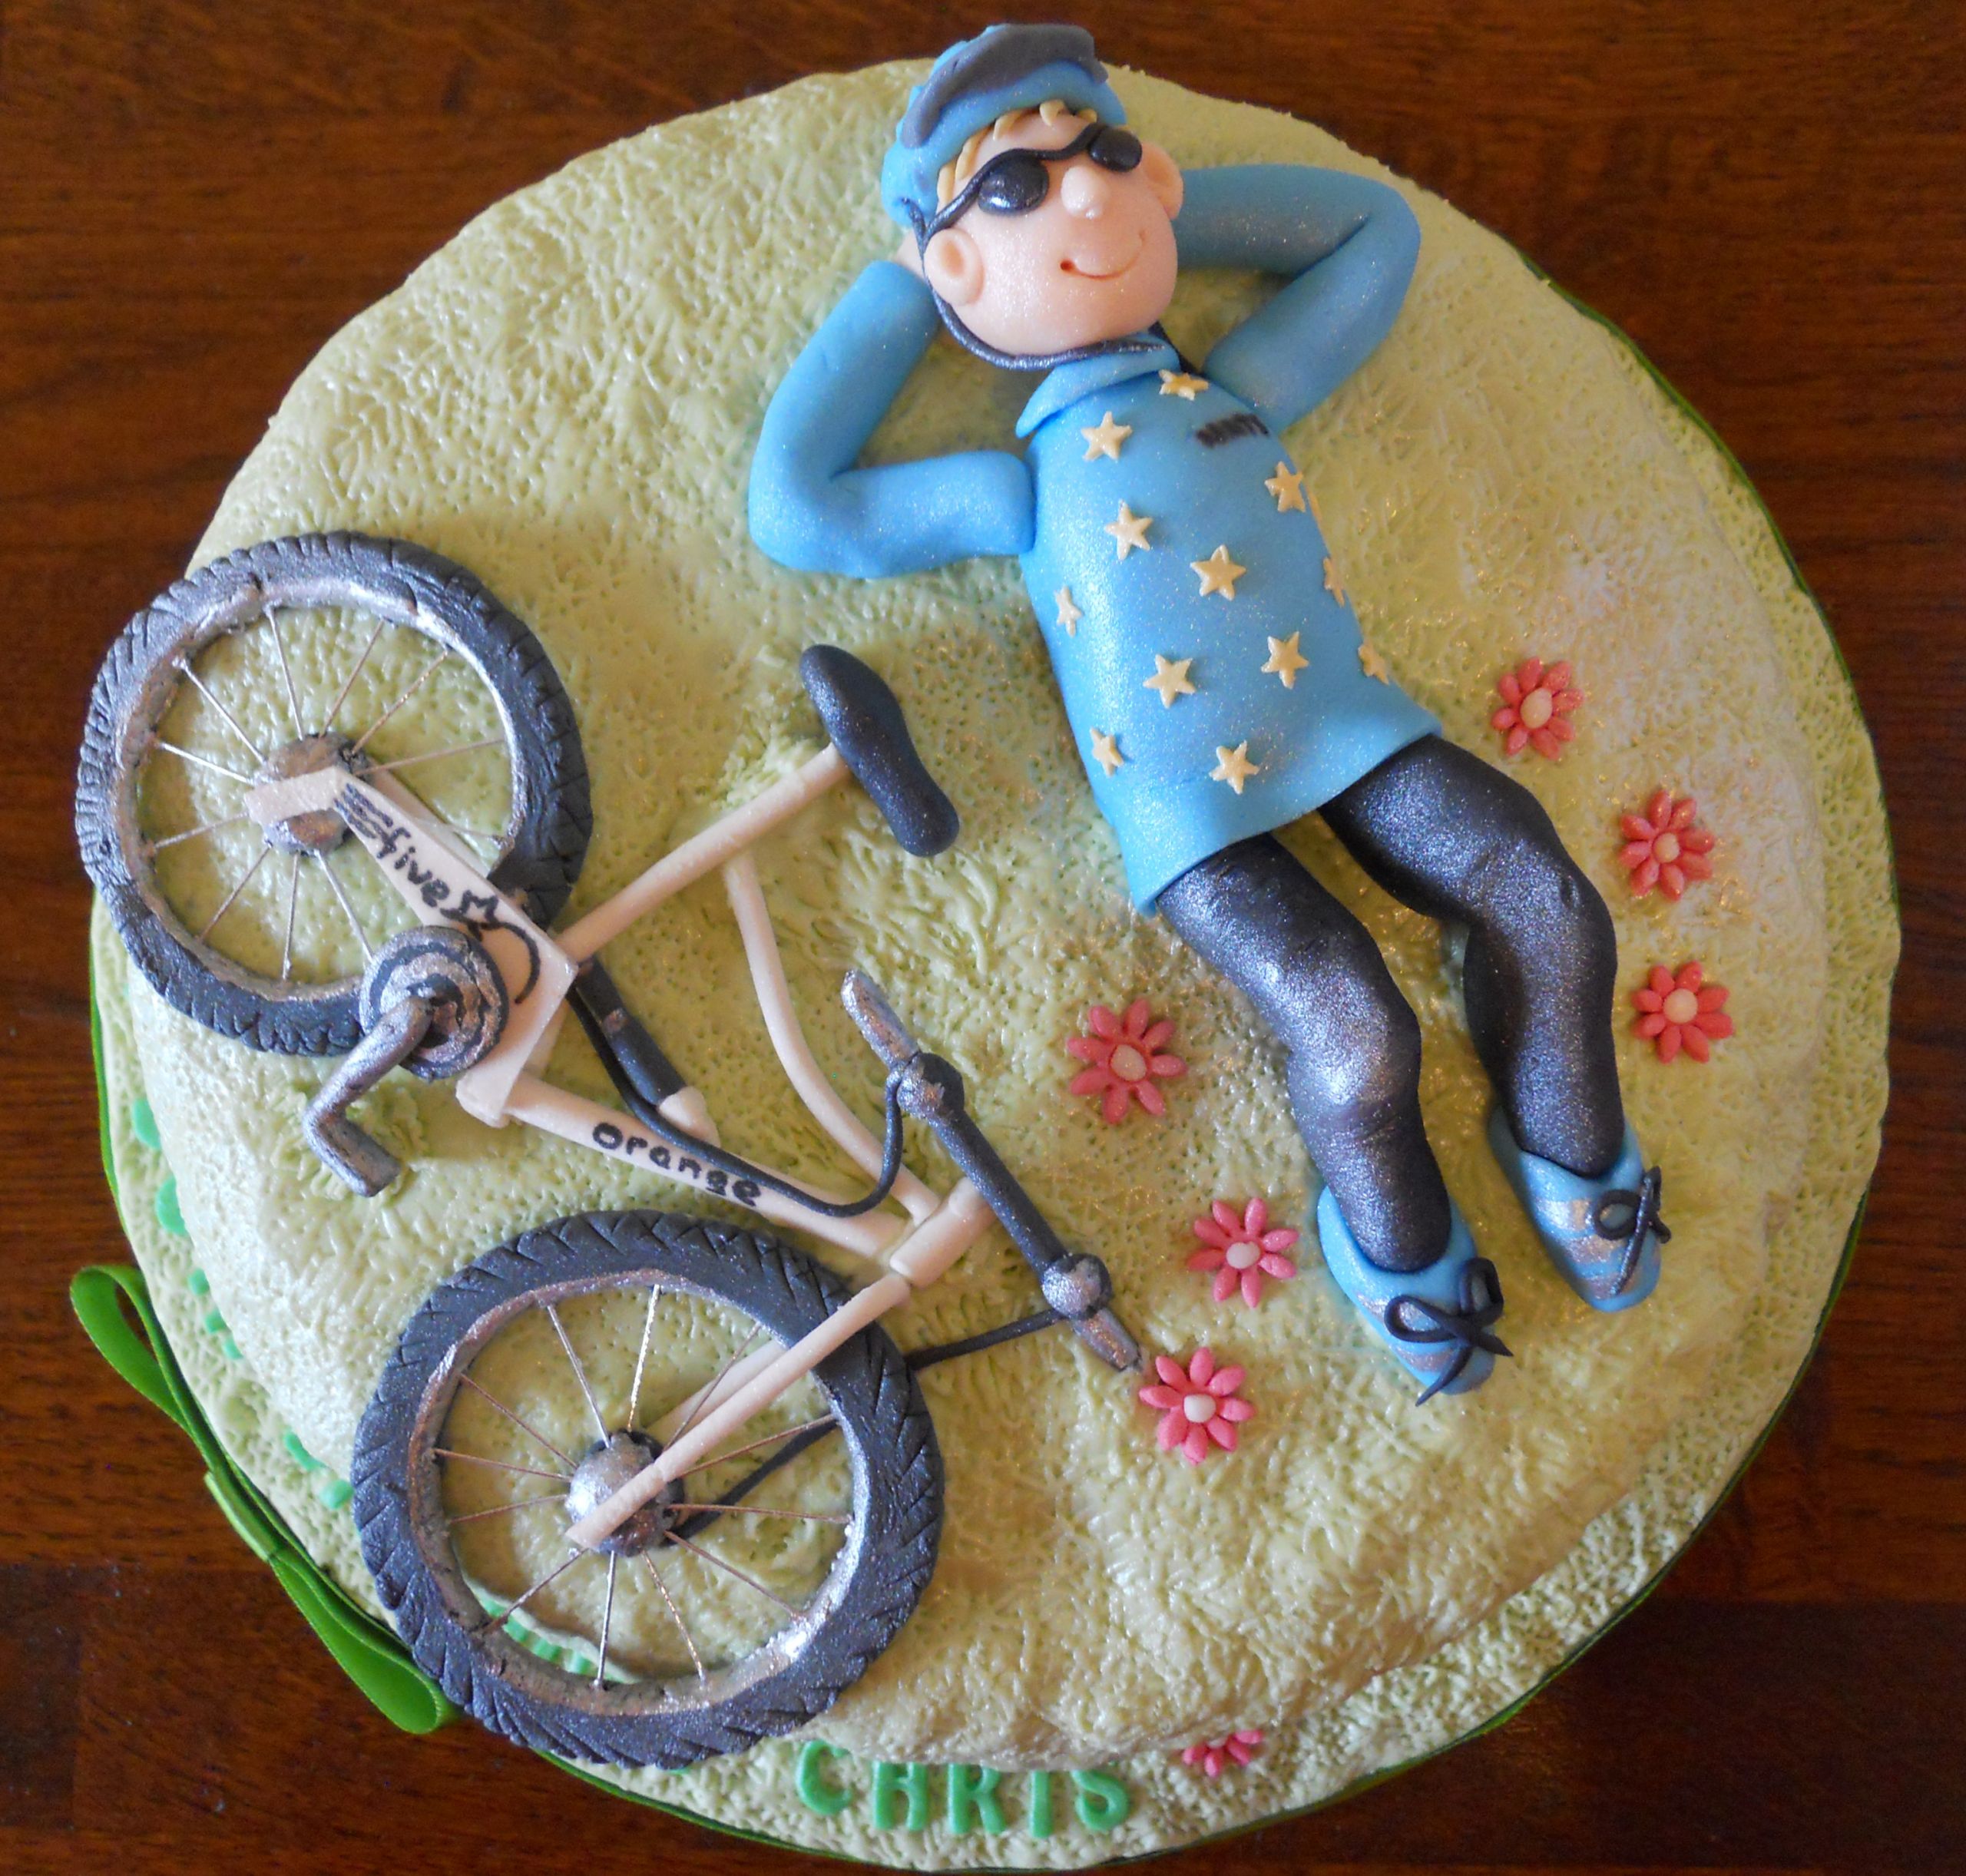 Bicycle Birthday Cake
 An Intricate Mountain Bike Cake